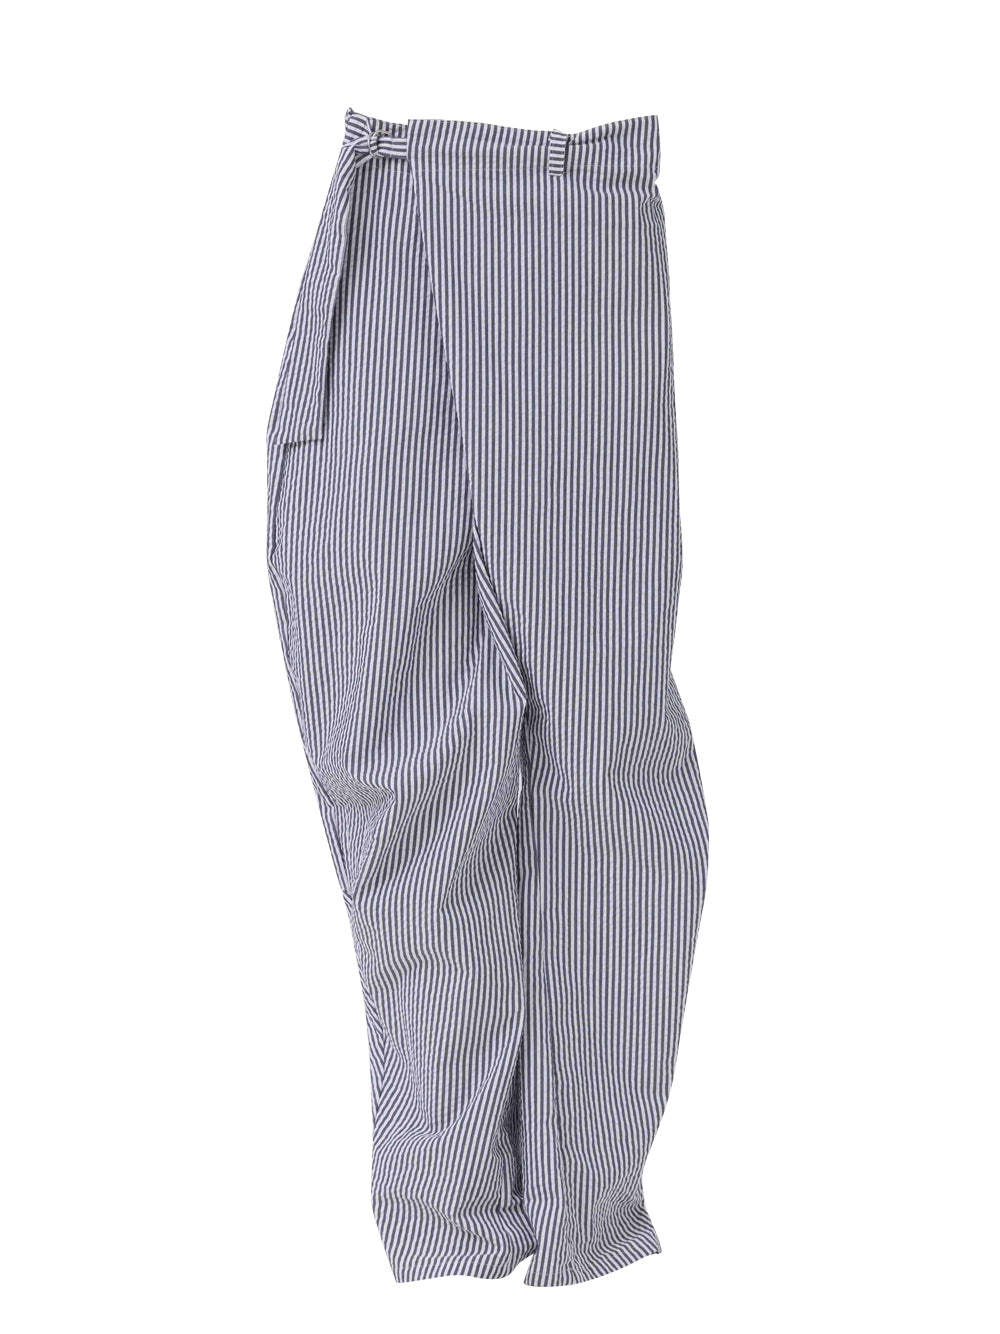 Cool Max Grey Striped Pants